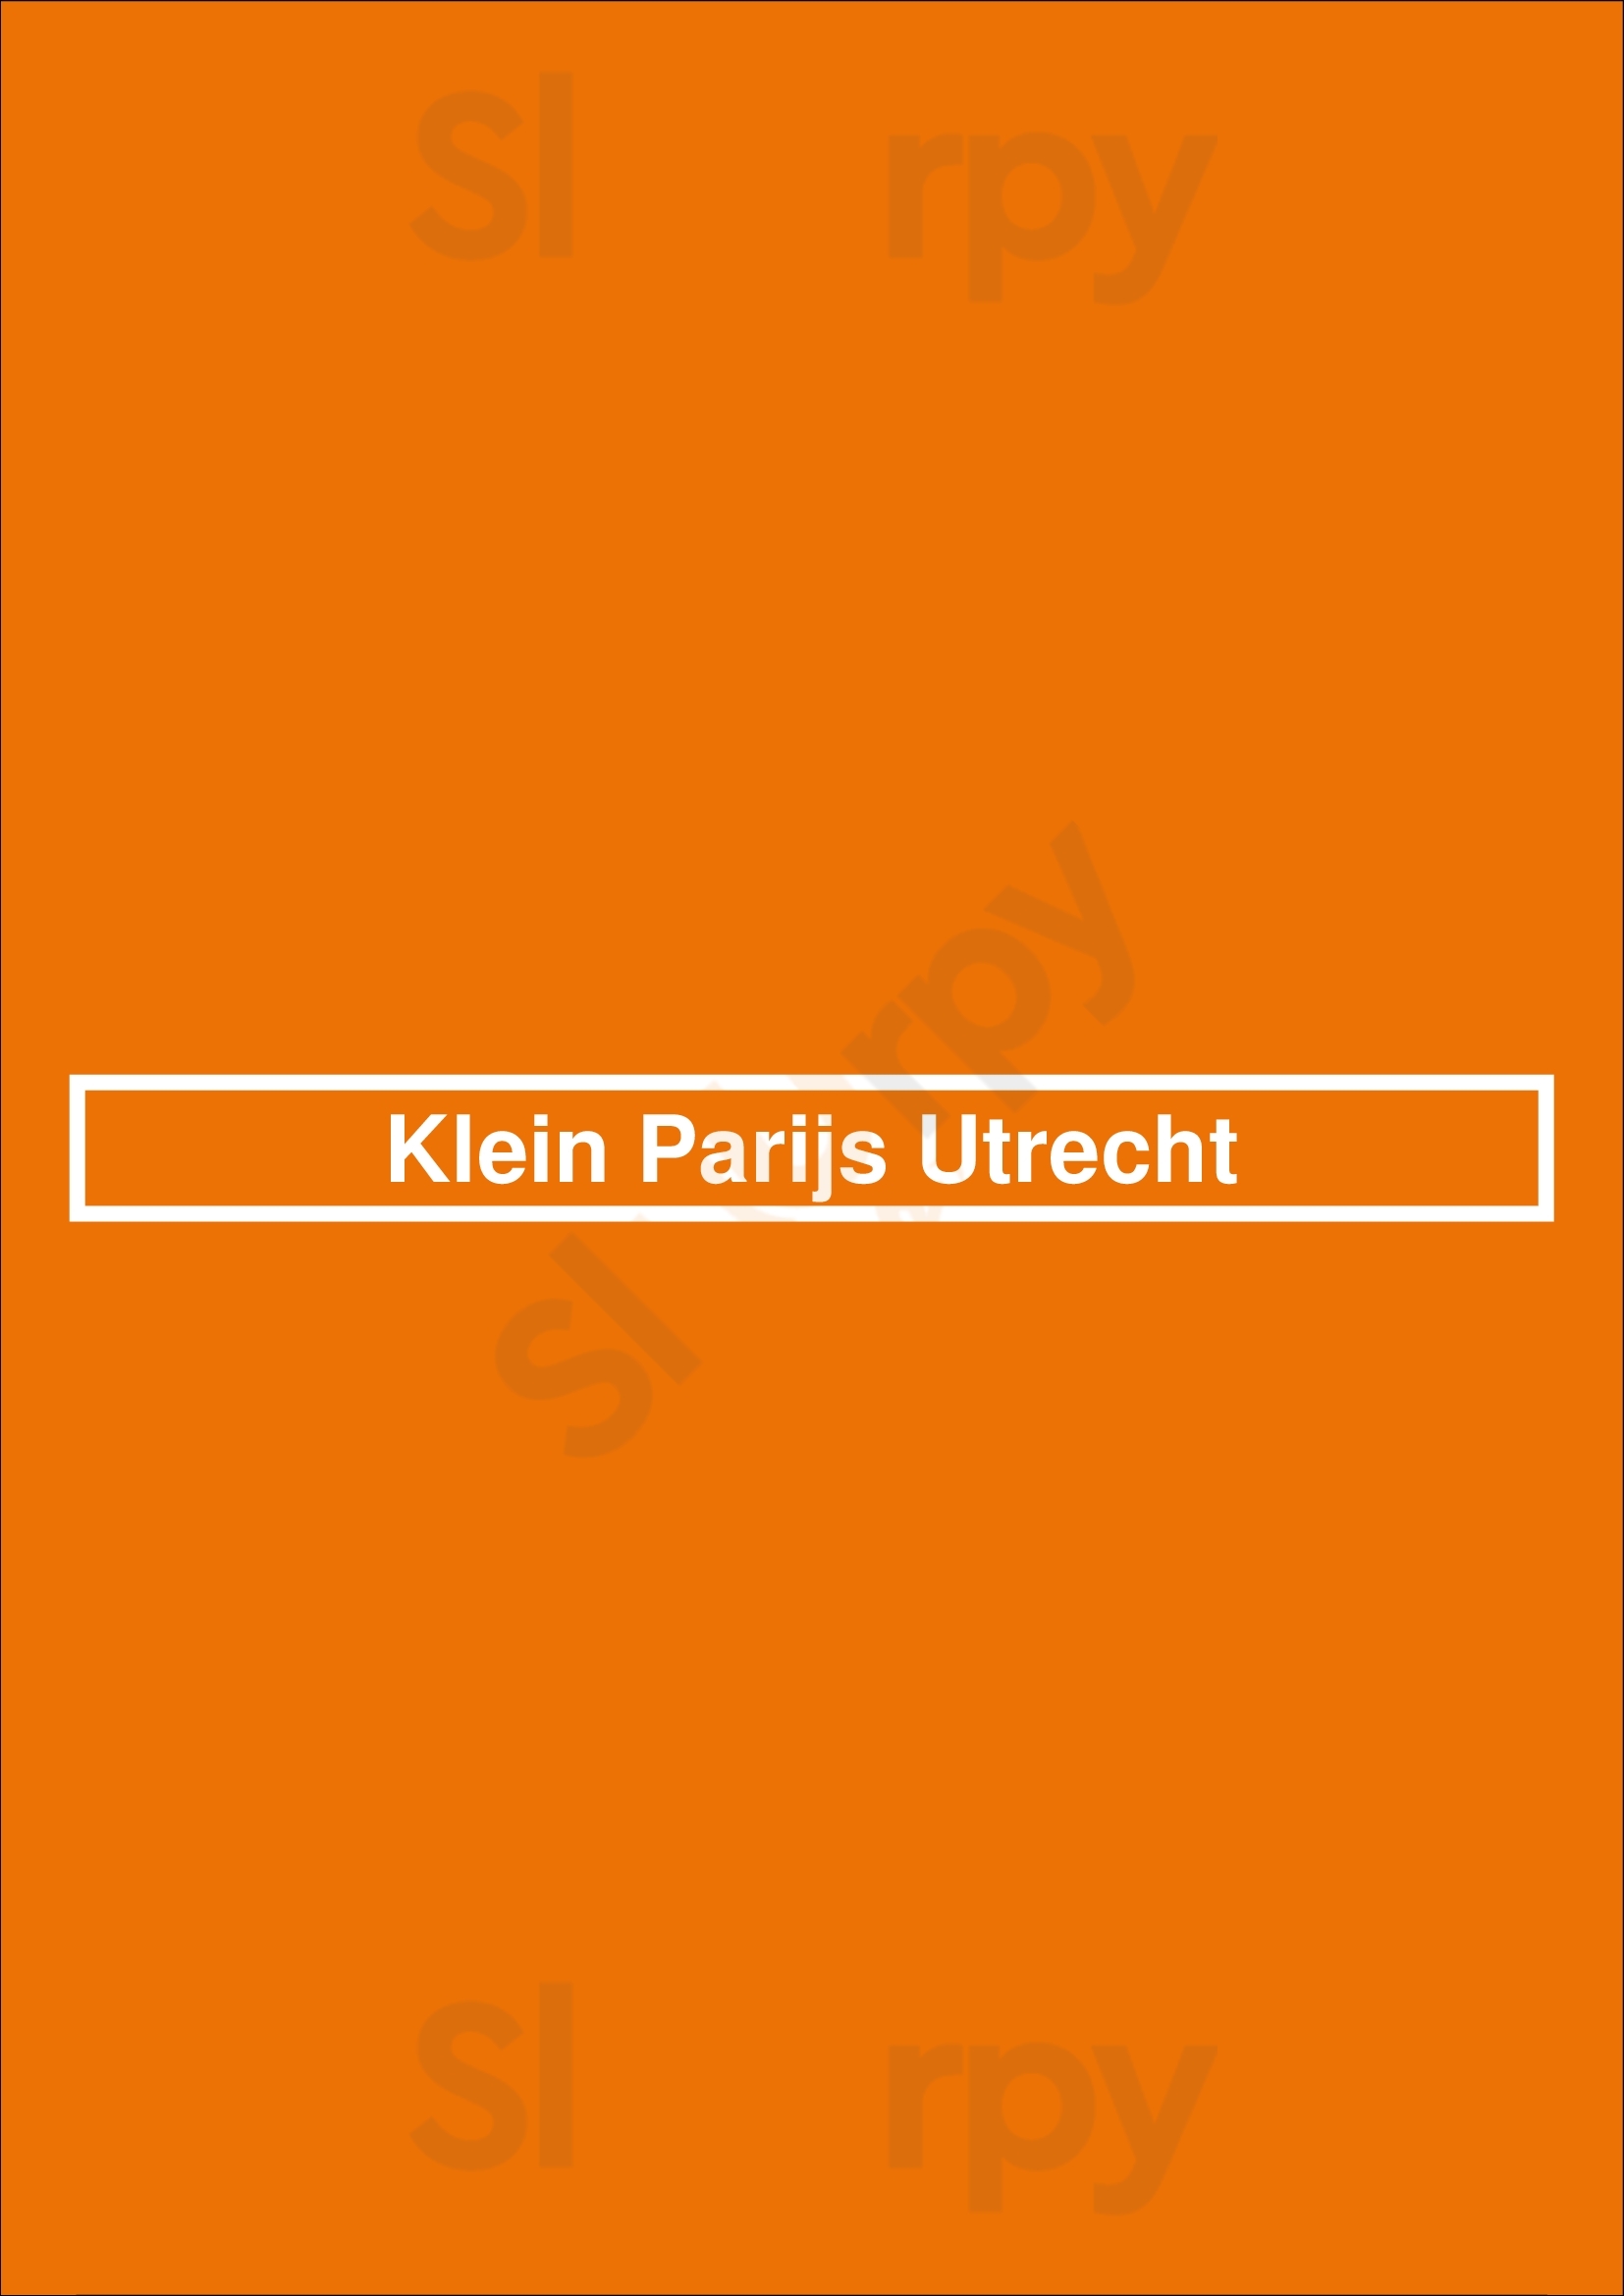 Klein Parijs Utrecht Utrecht Menu - 1